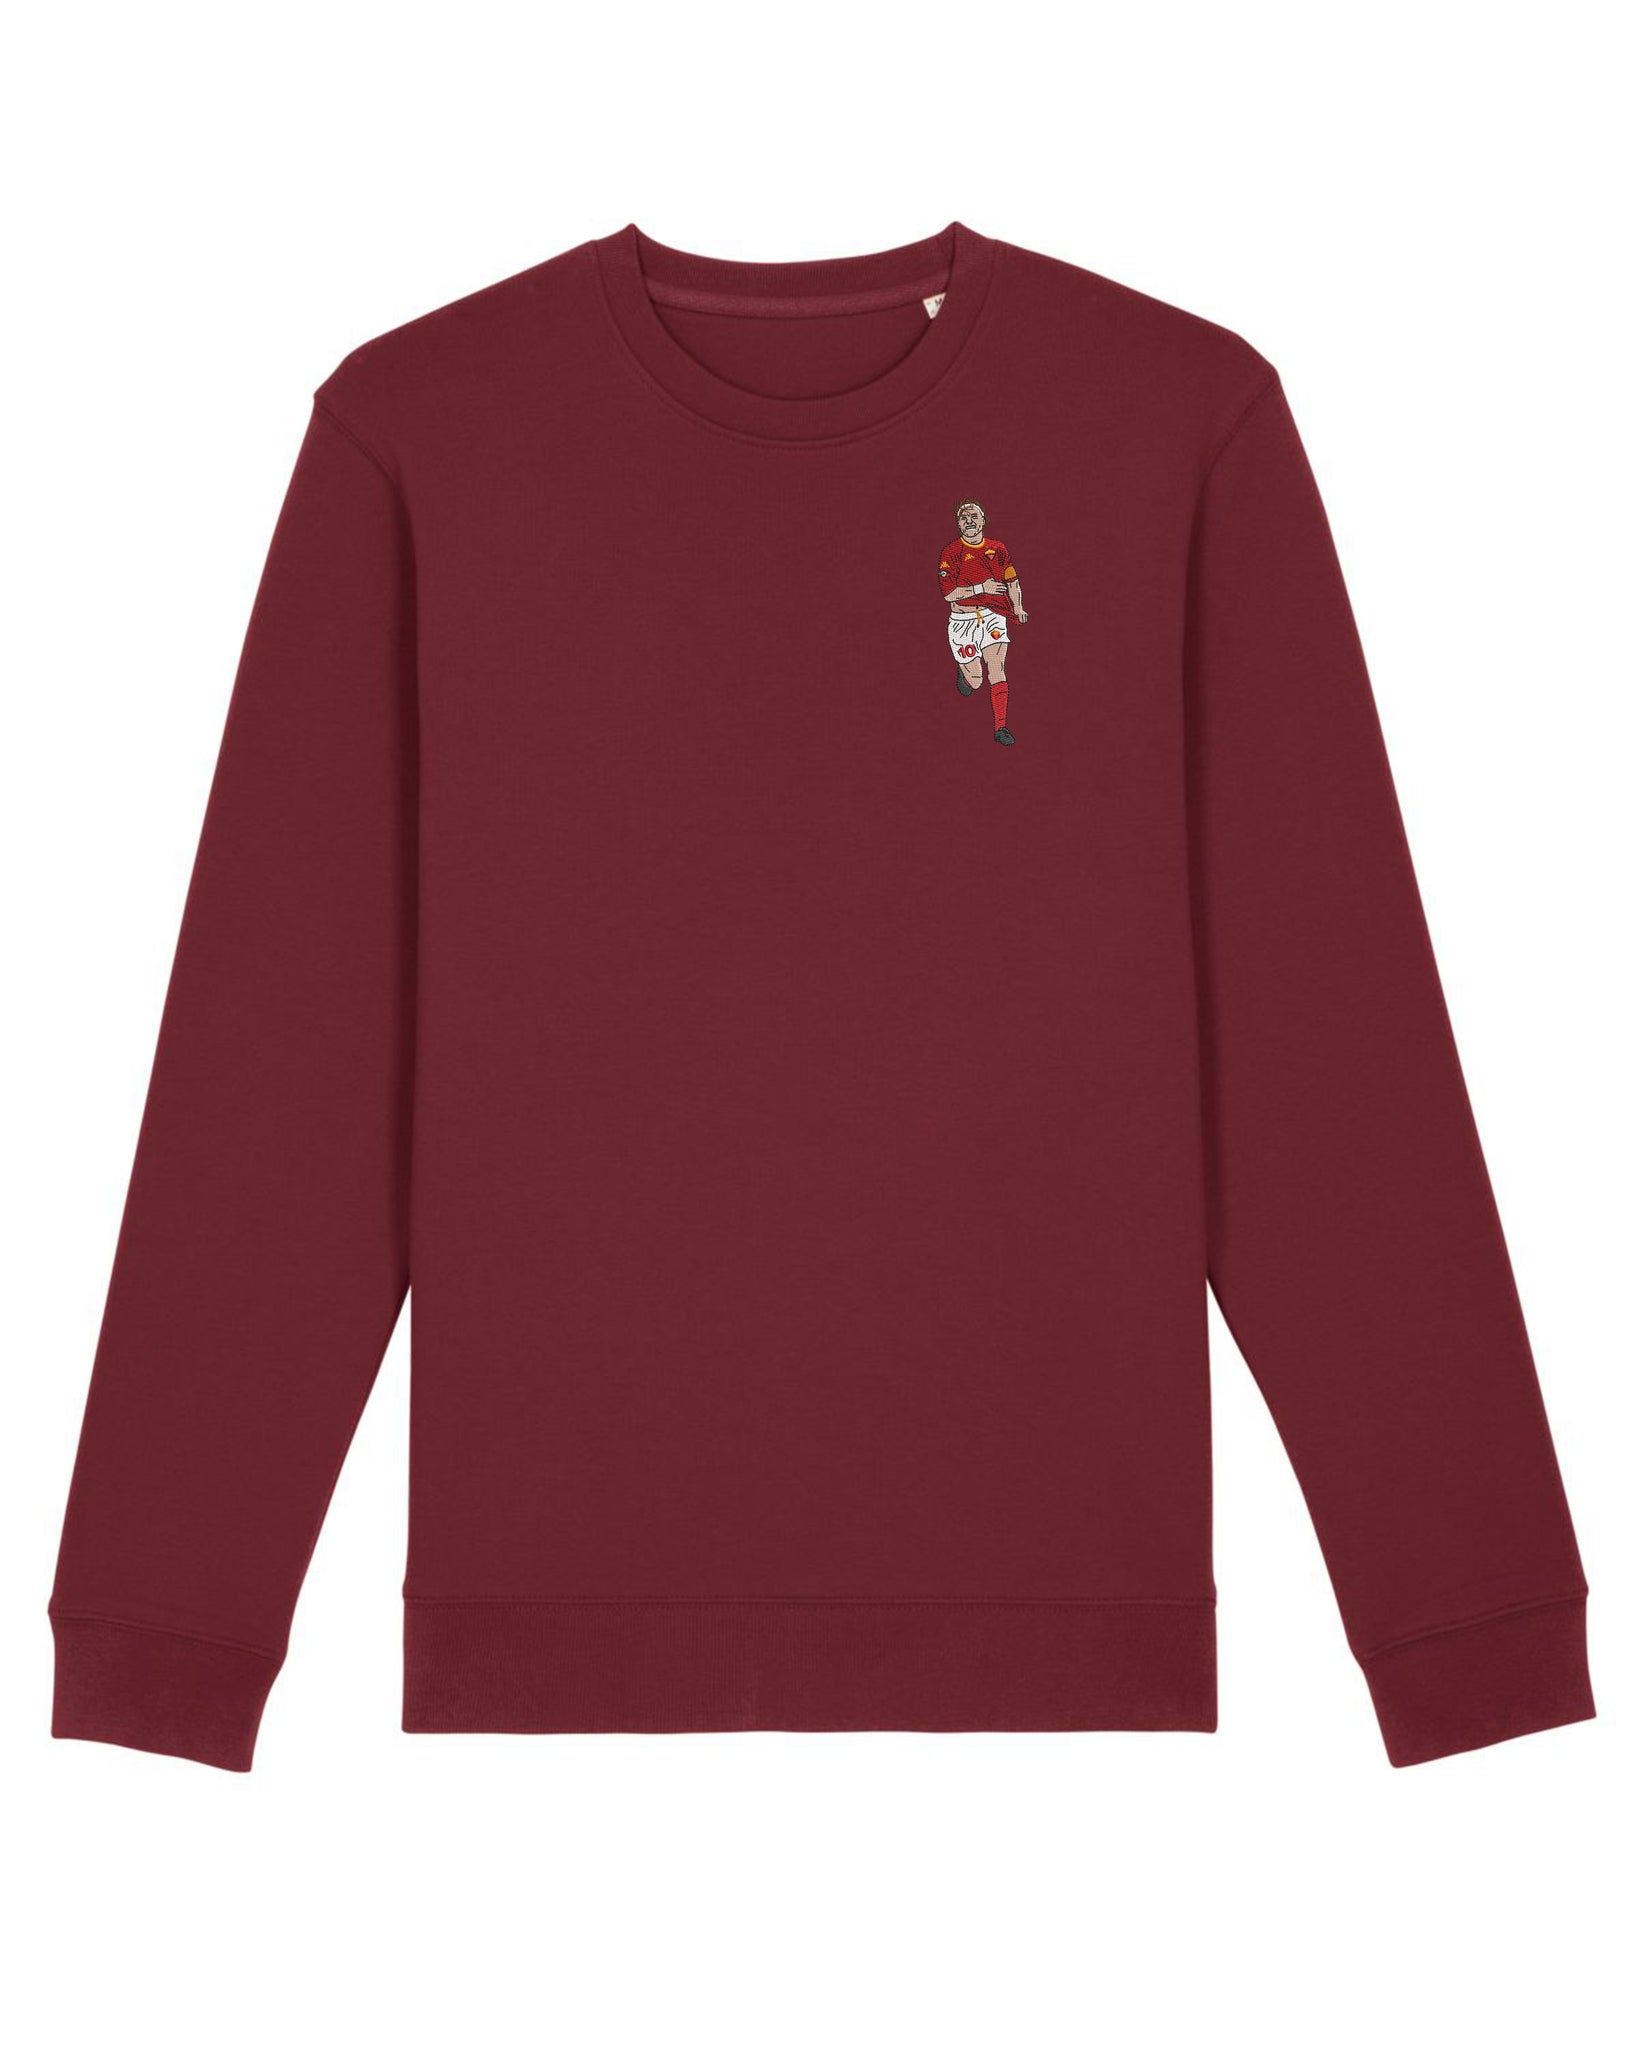 Embroidered Totti 2001 Sweatshirt